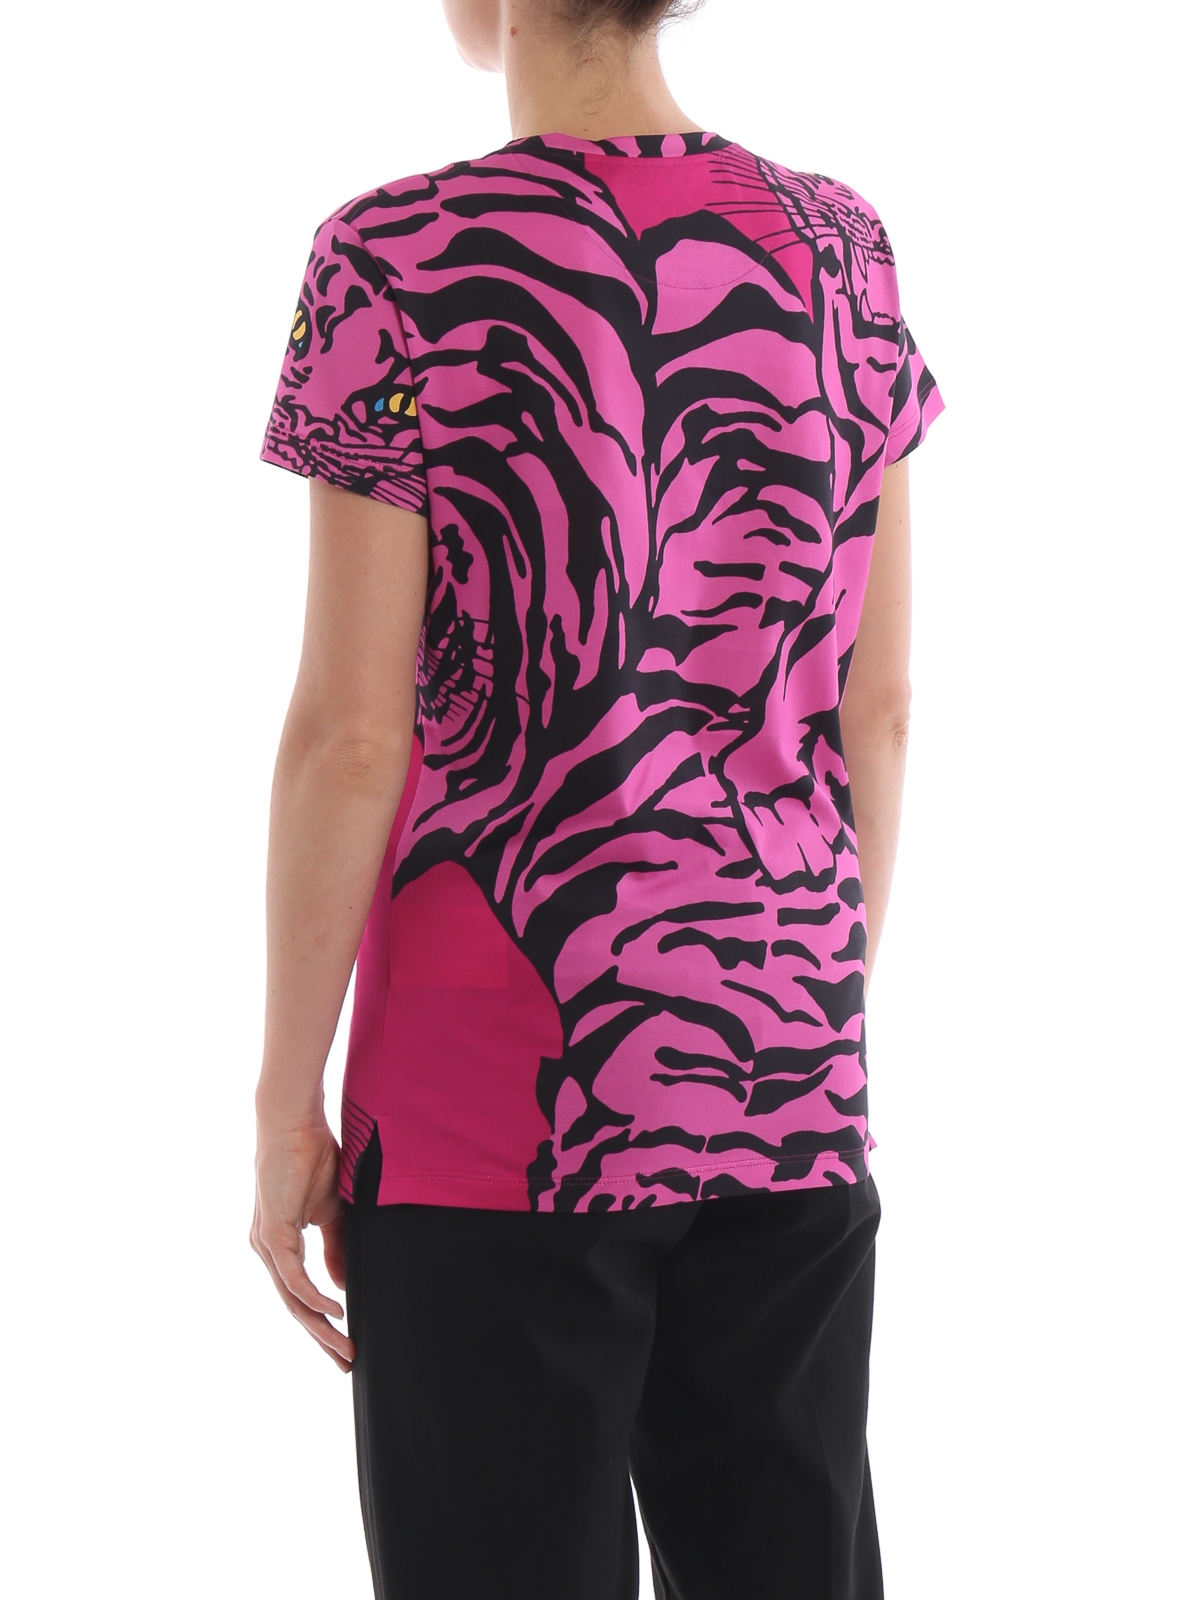 valentino tiger shirt